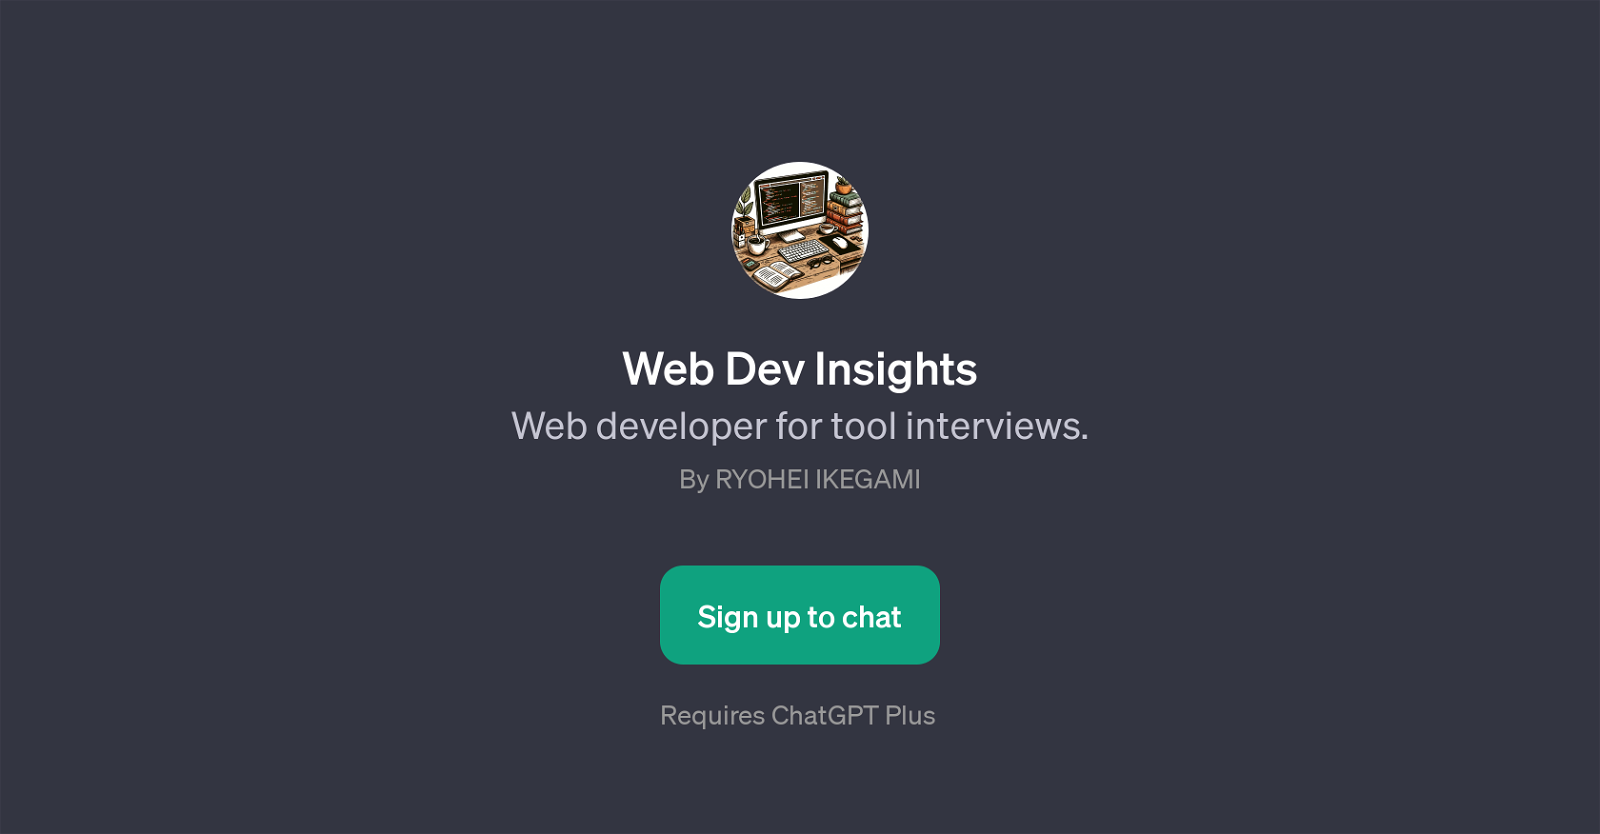 Web Dev Insights website